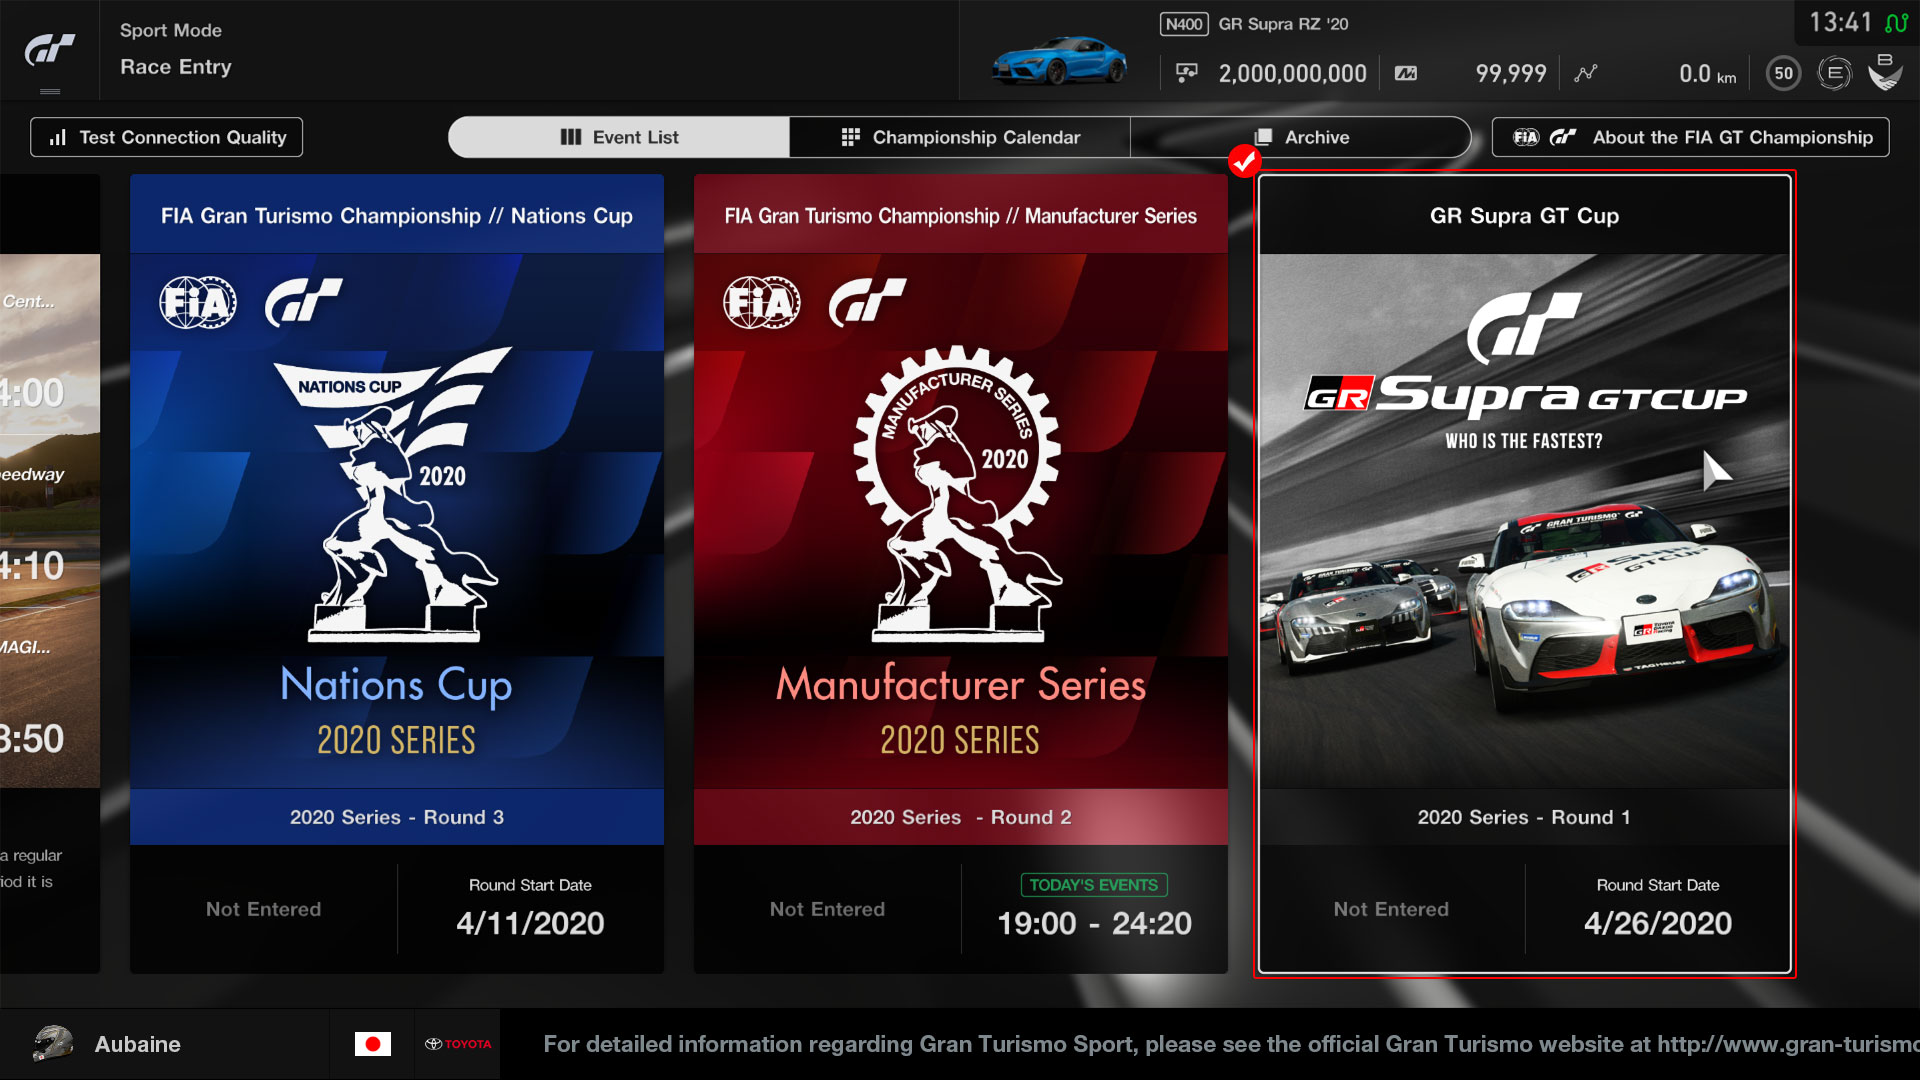 Select “GR Supra GT Cup”